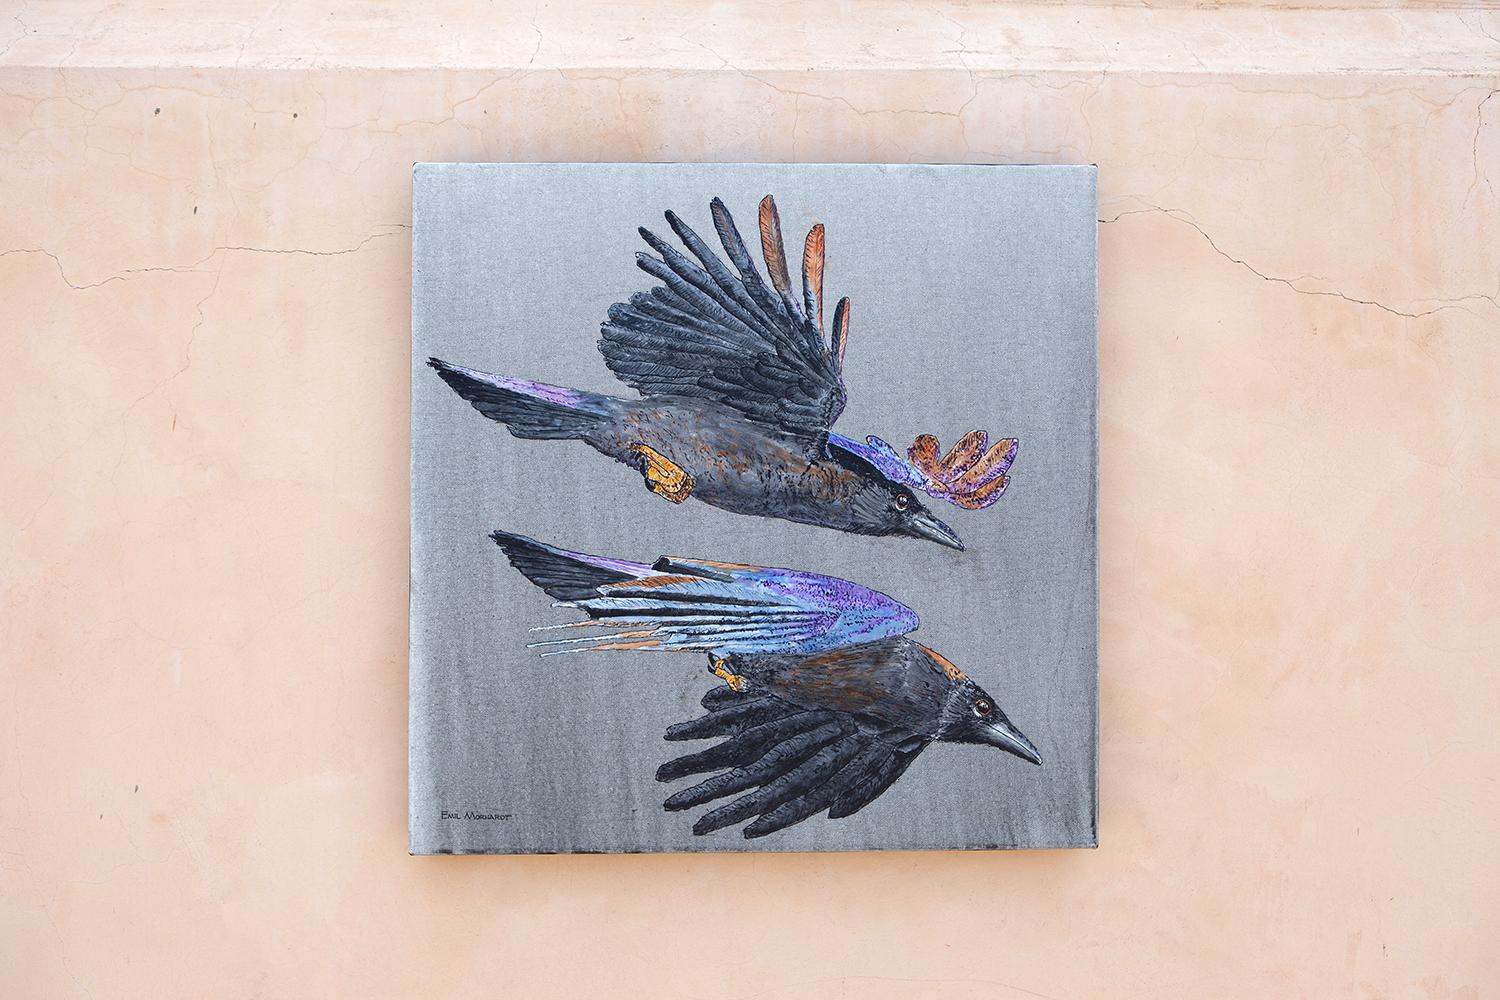 Speeding Crows, Original Painting - American Realist Art by Emil Morhardt